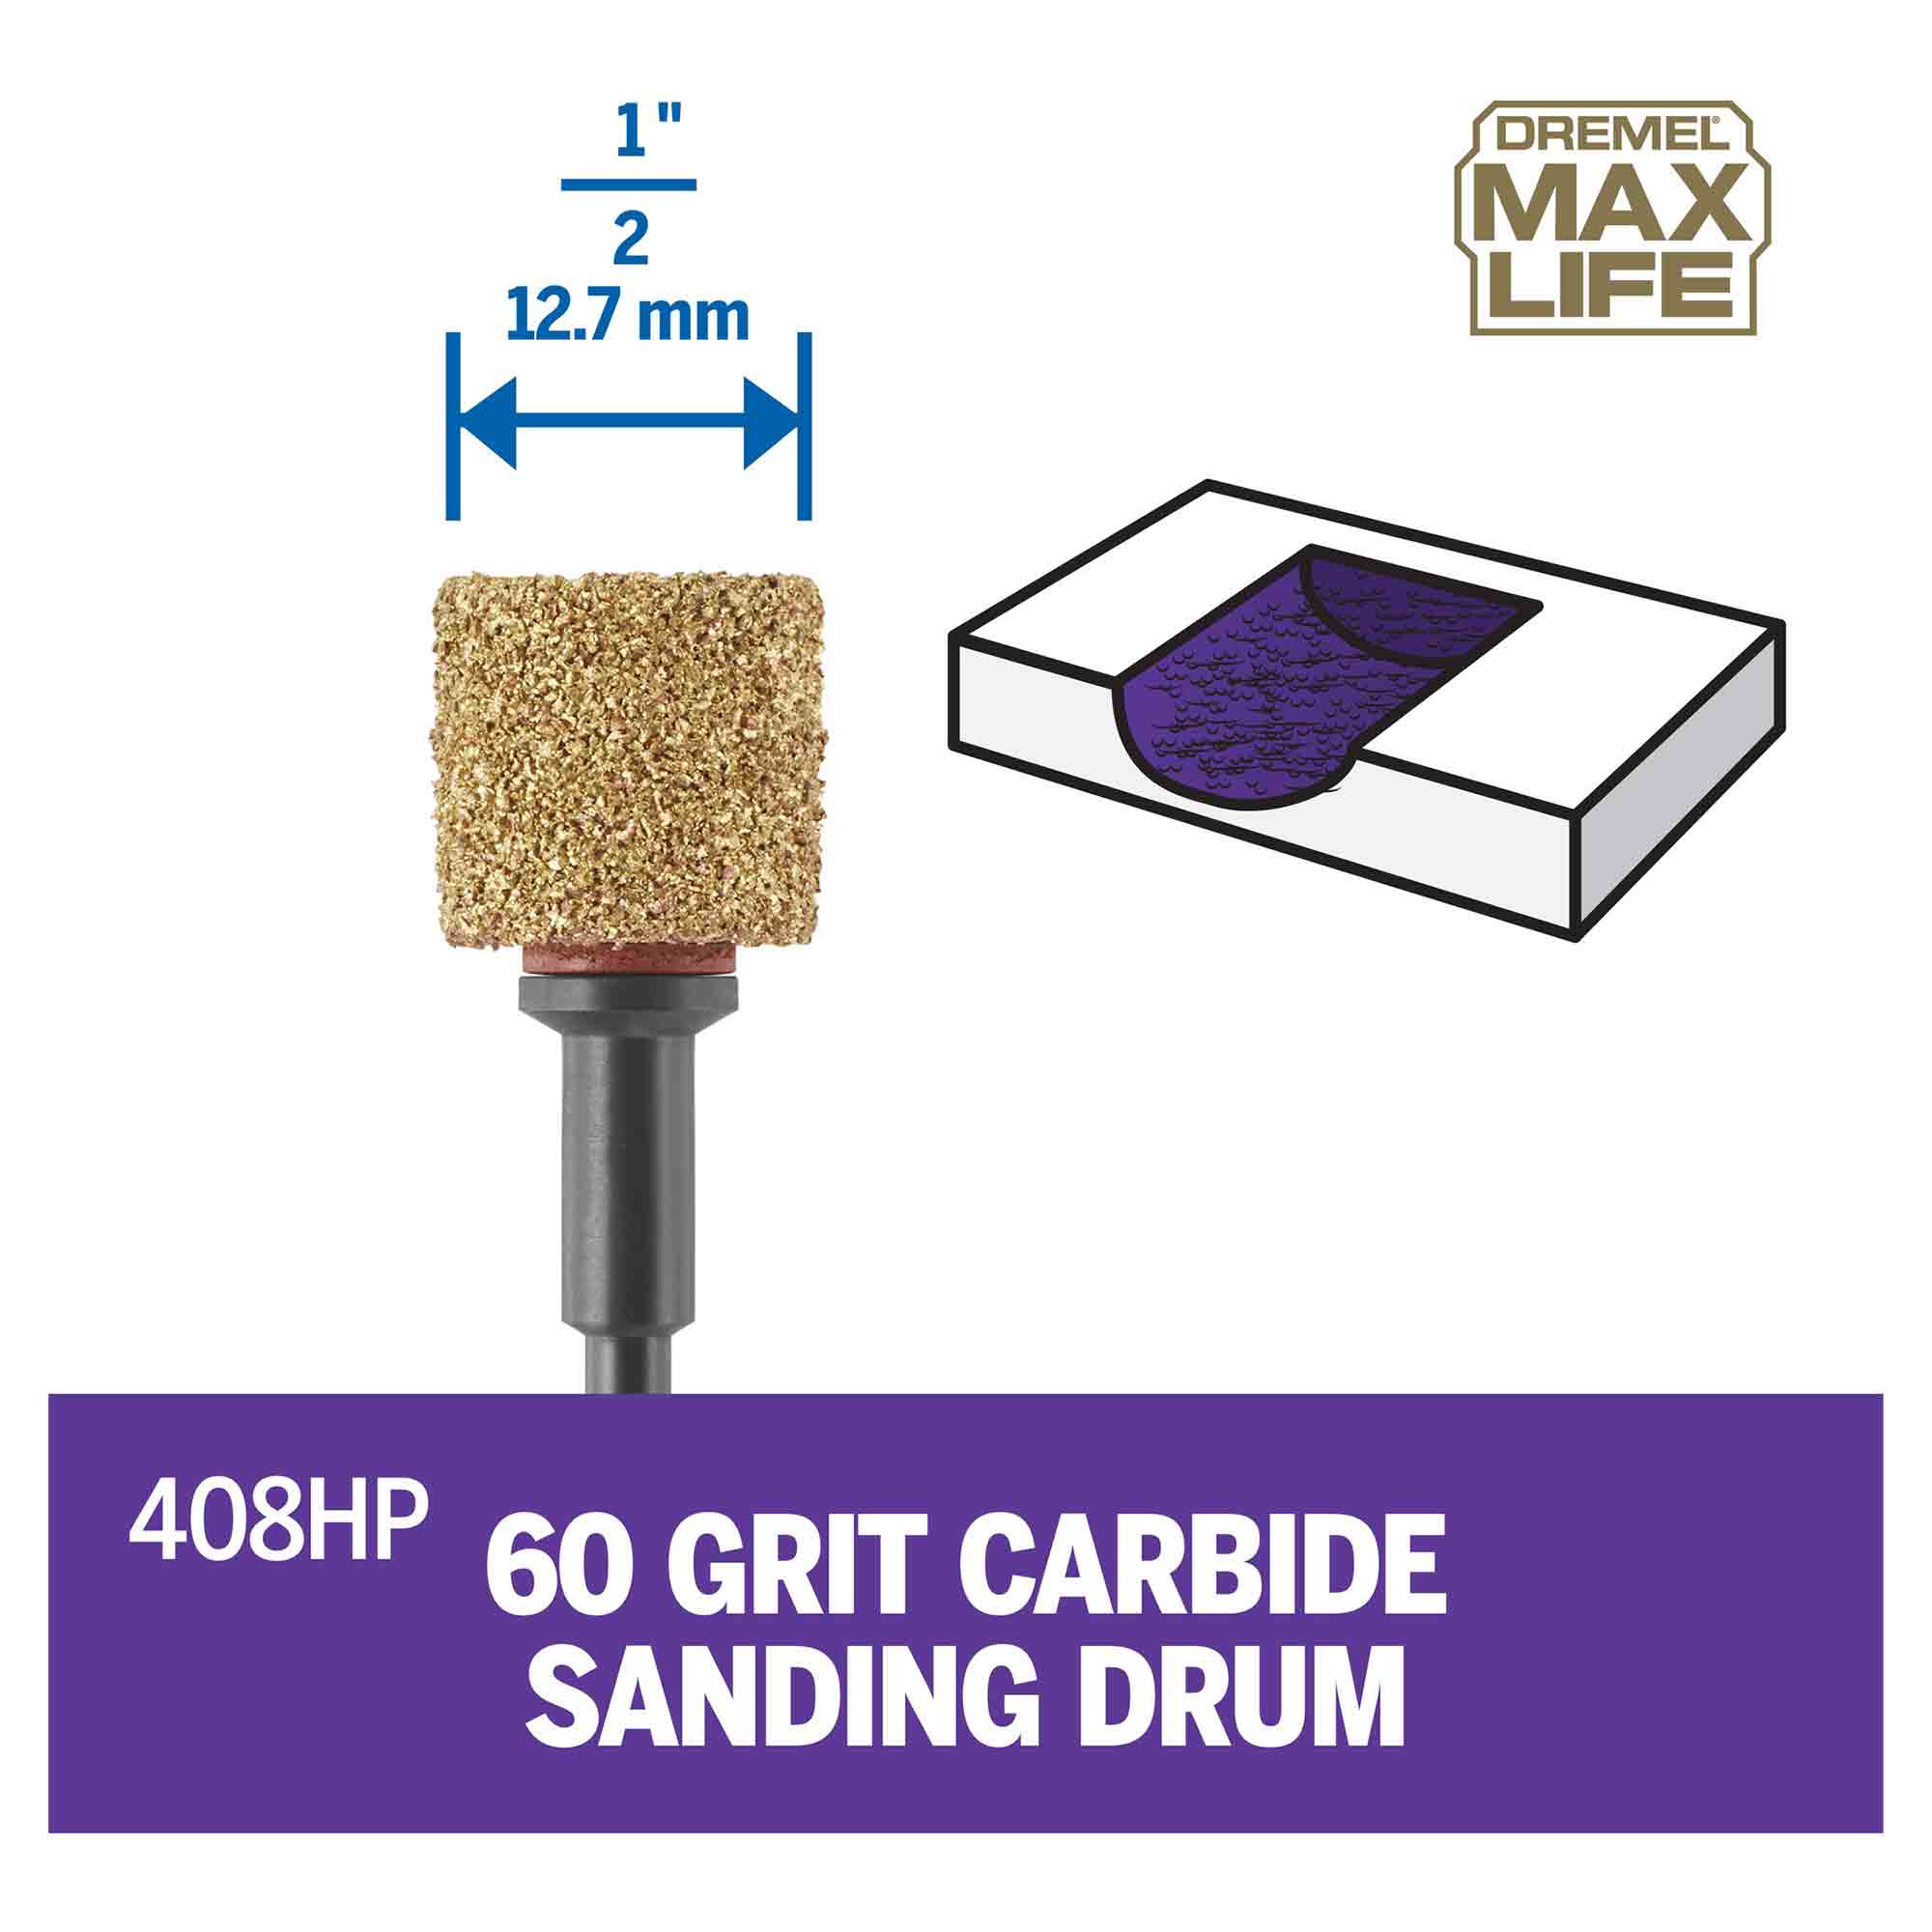 Dremel 408HP - 60 Grit Carbide Sanding Drum